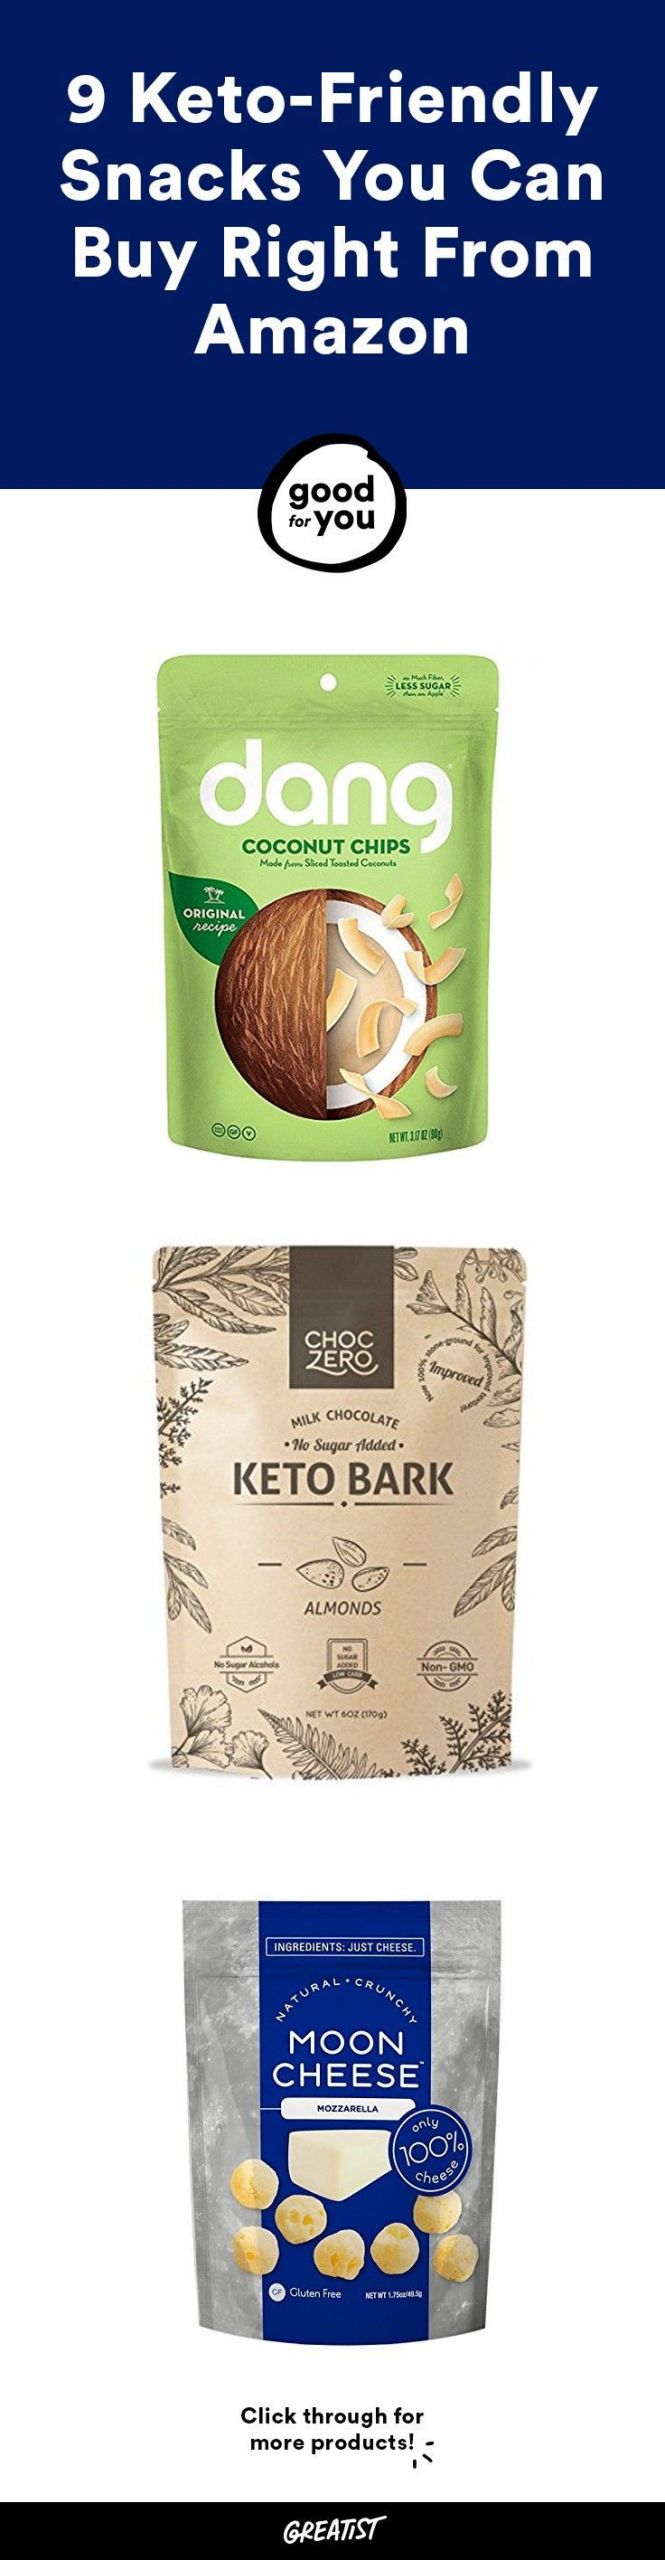 Keto Diet Snacks To Buy
 9 Keto Friendly Snacks You Can Buy on Amazon